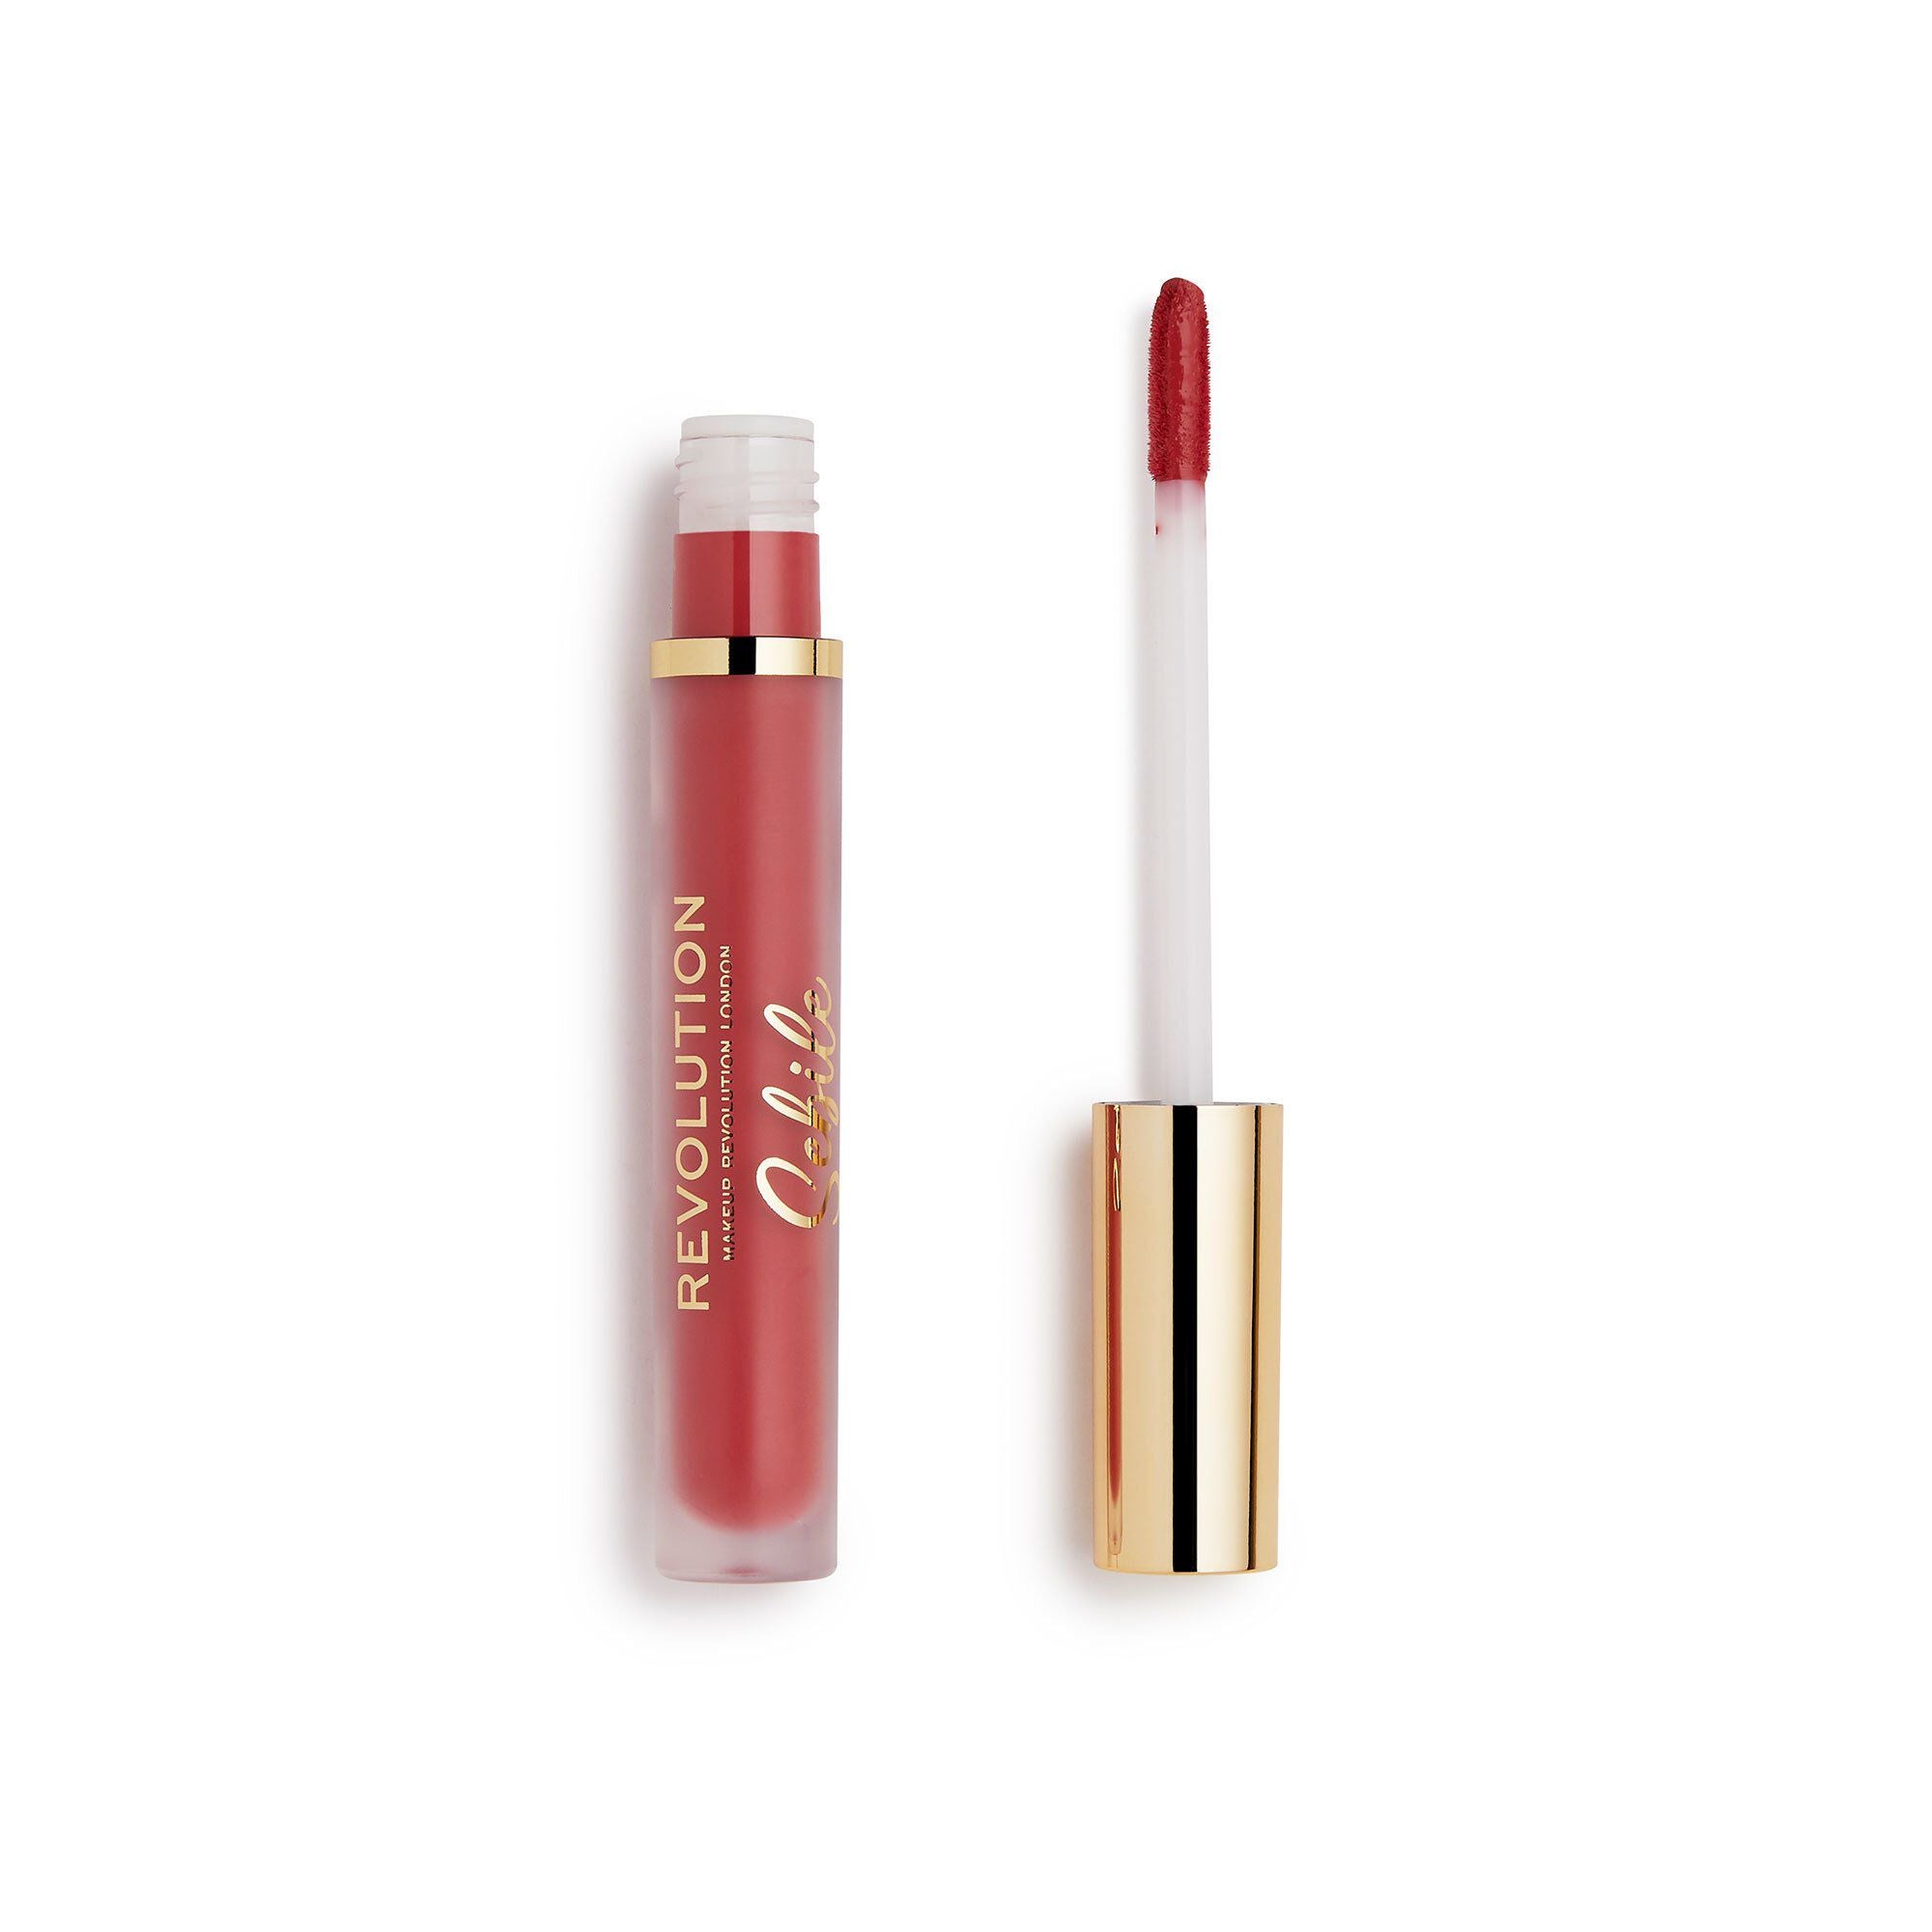 Shop Makeup Revolution Matte Bomb Liquid Lipstick online at Hok – HOK Makeup